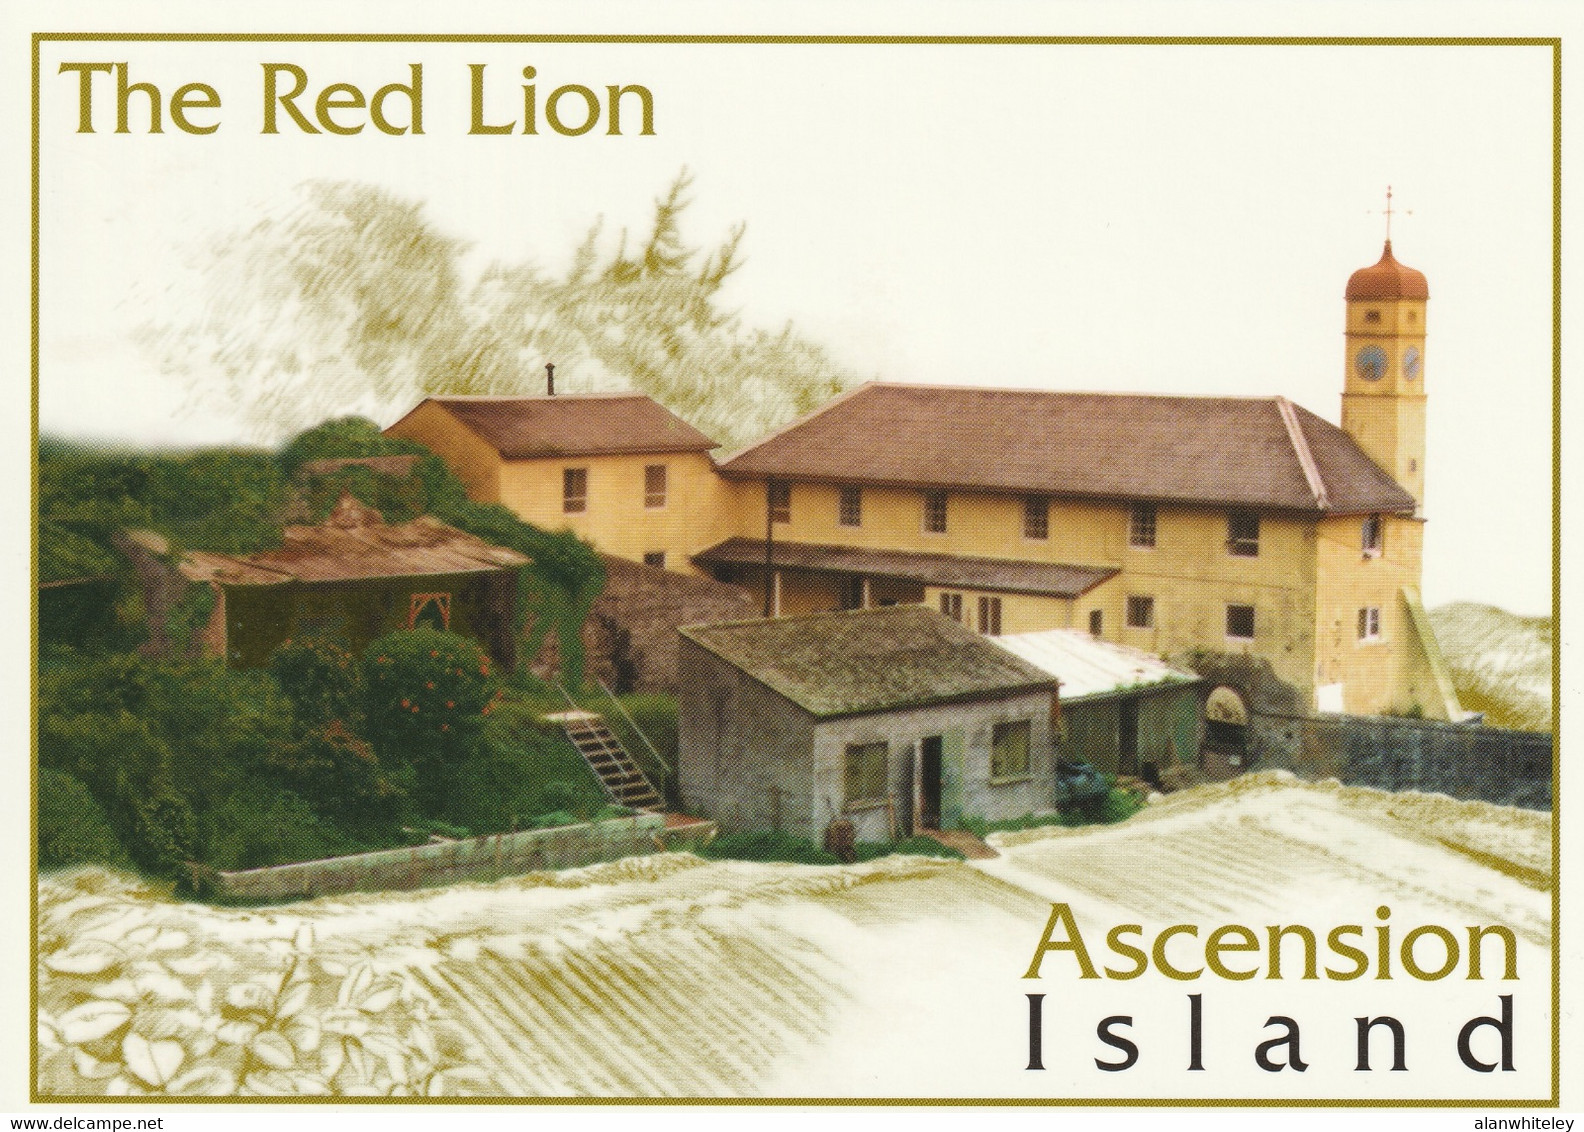 ASCENSION ISLAND 2001 Tourism: Set of 10 Postcards MINT/UNUSED